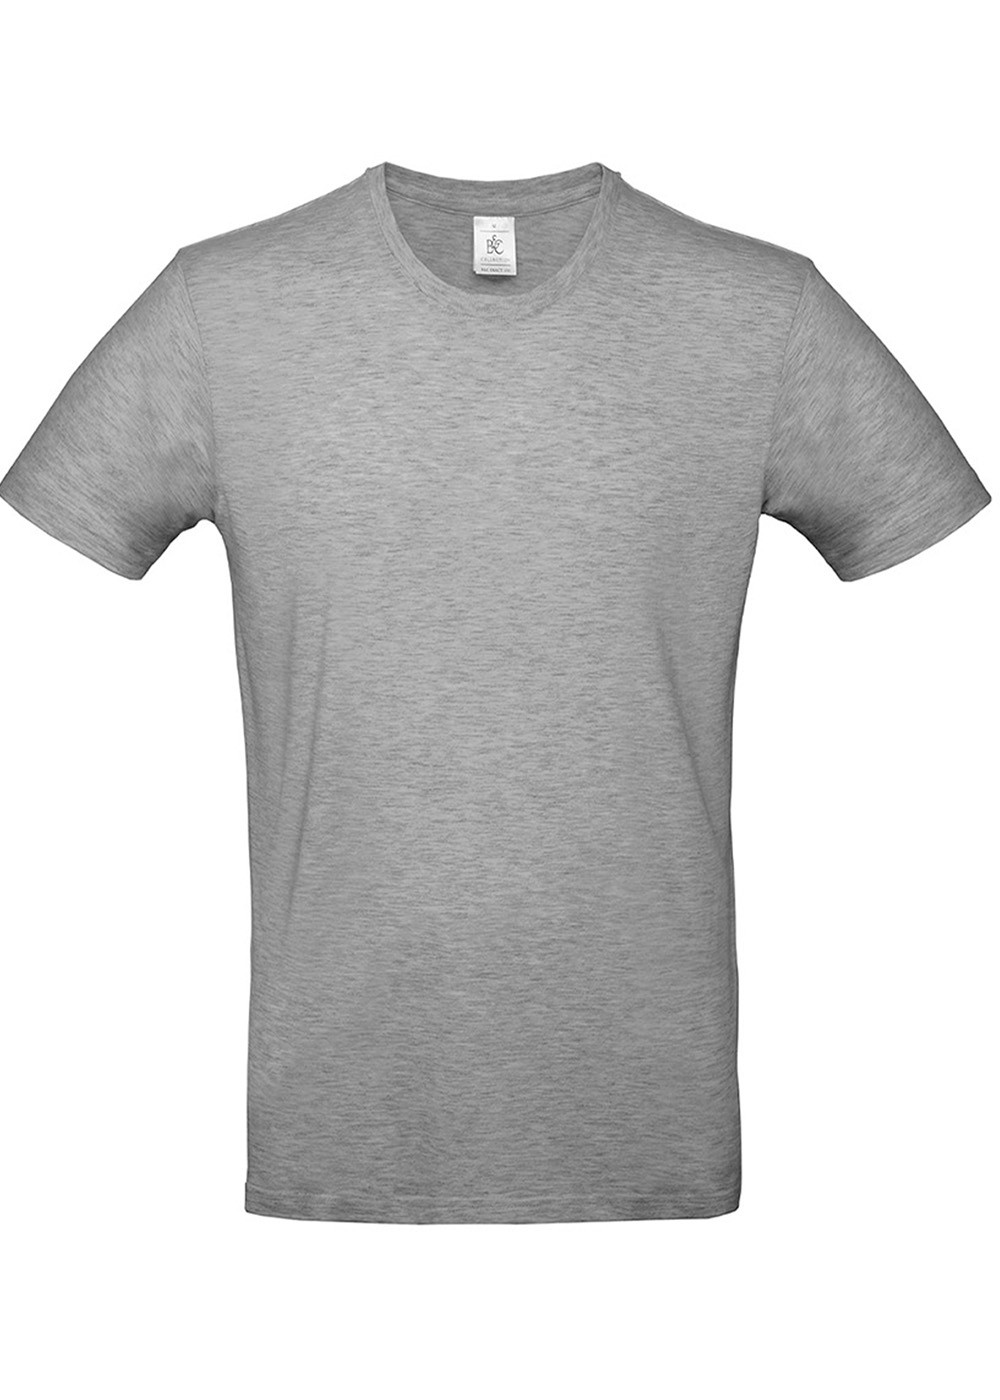 Unisex Fashion T-shirt Sport Grey